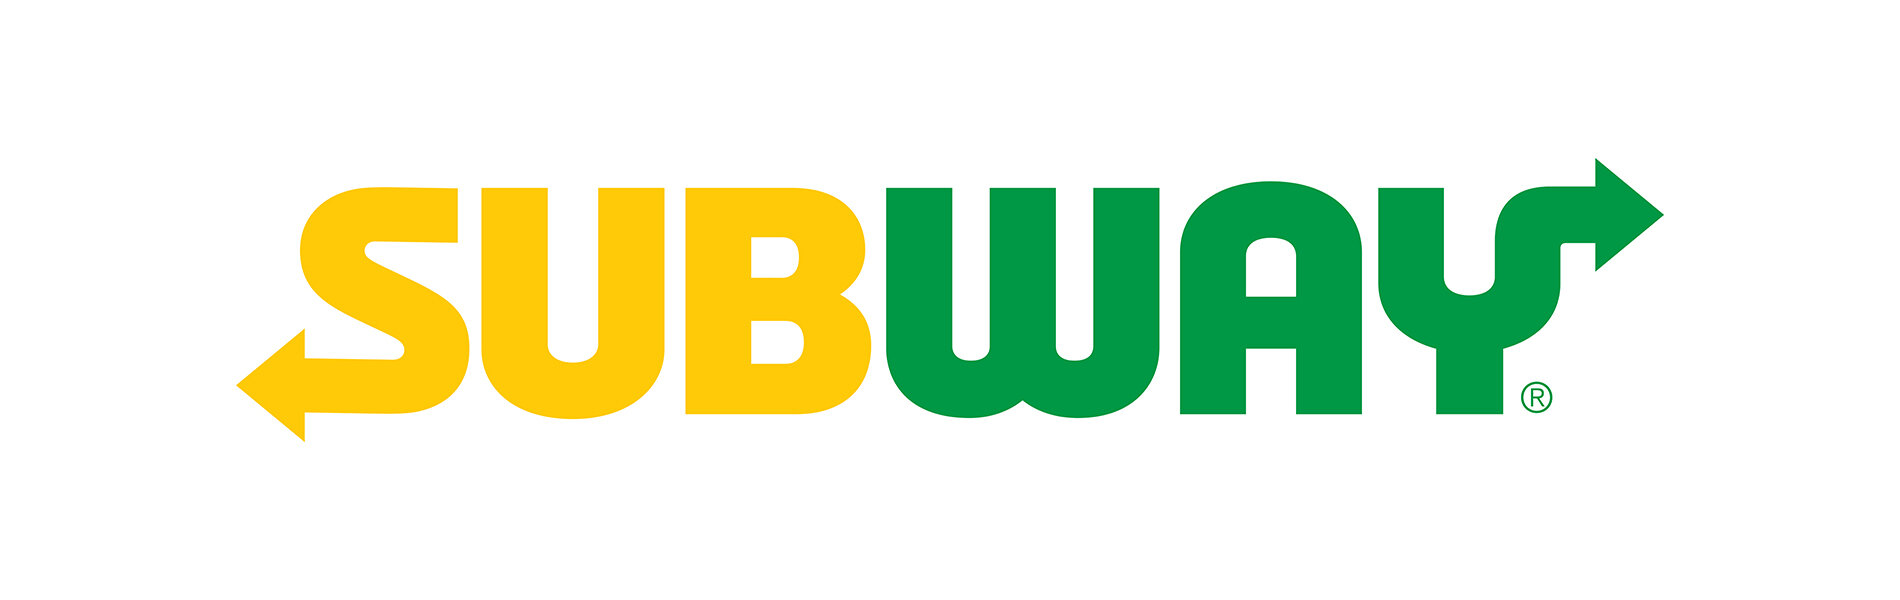 subway®-restaurants-reveals-bold-new-logo-and-symbol-null-HR.jpg